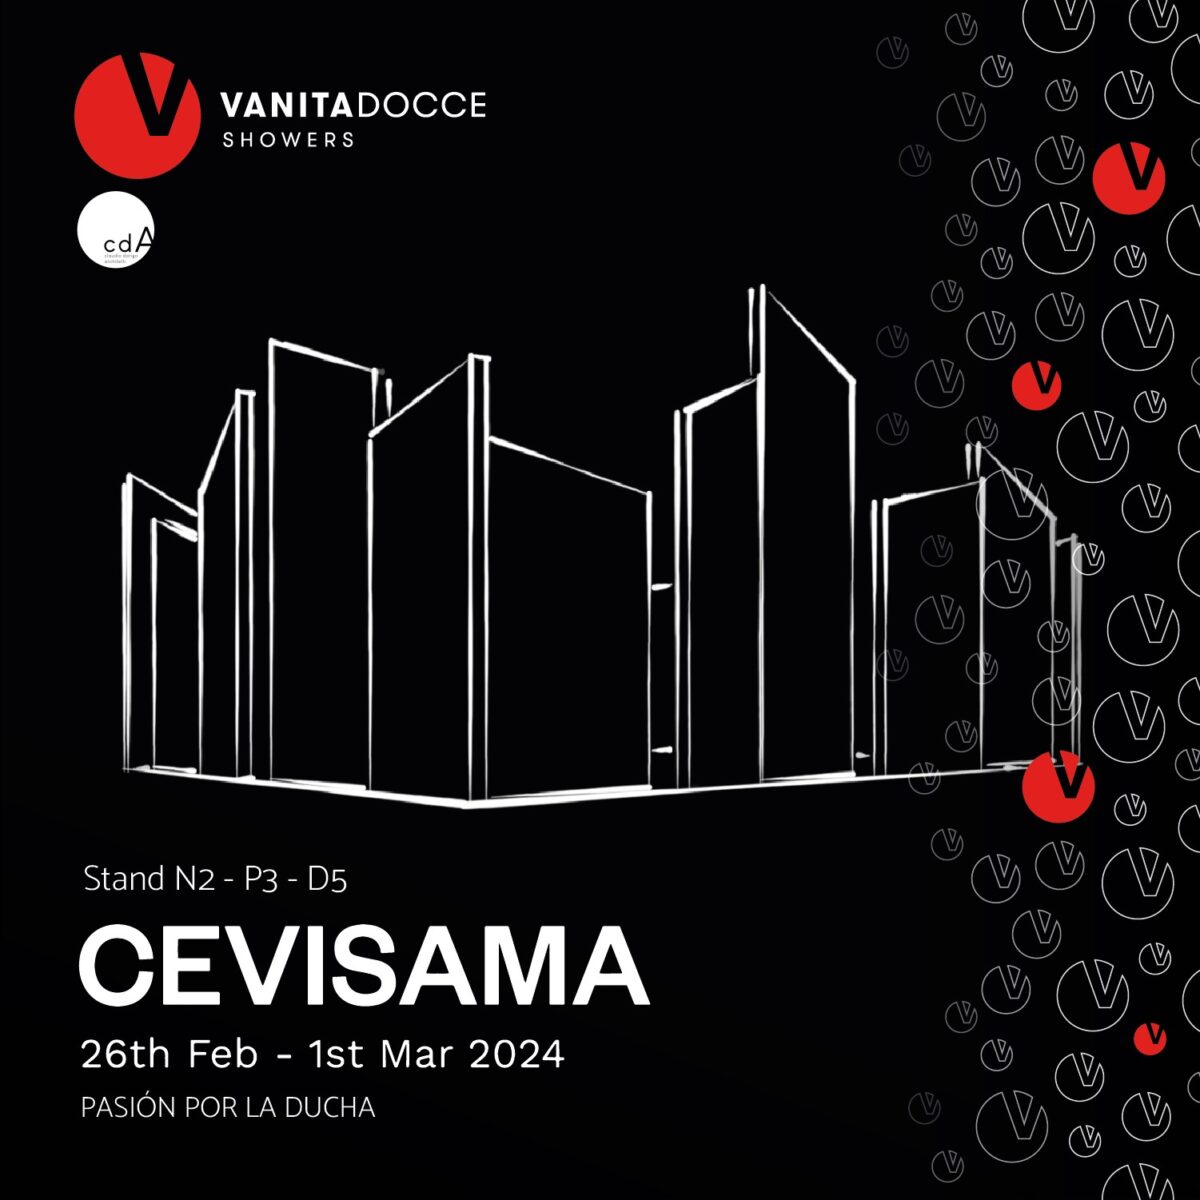 Vanita Docce at the Cevisama Fair of Valencia - Vanita Docce